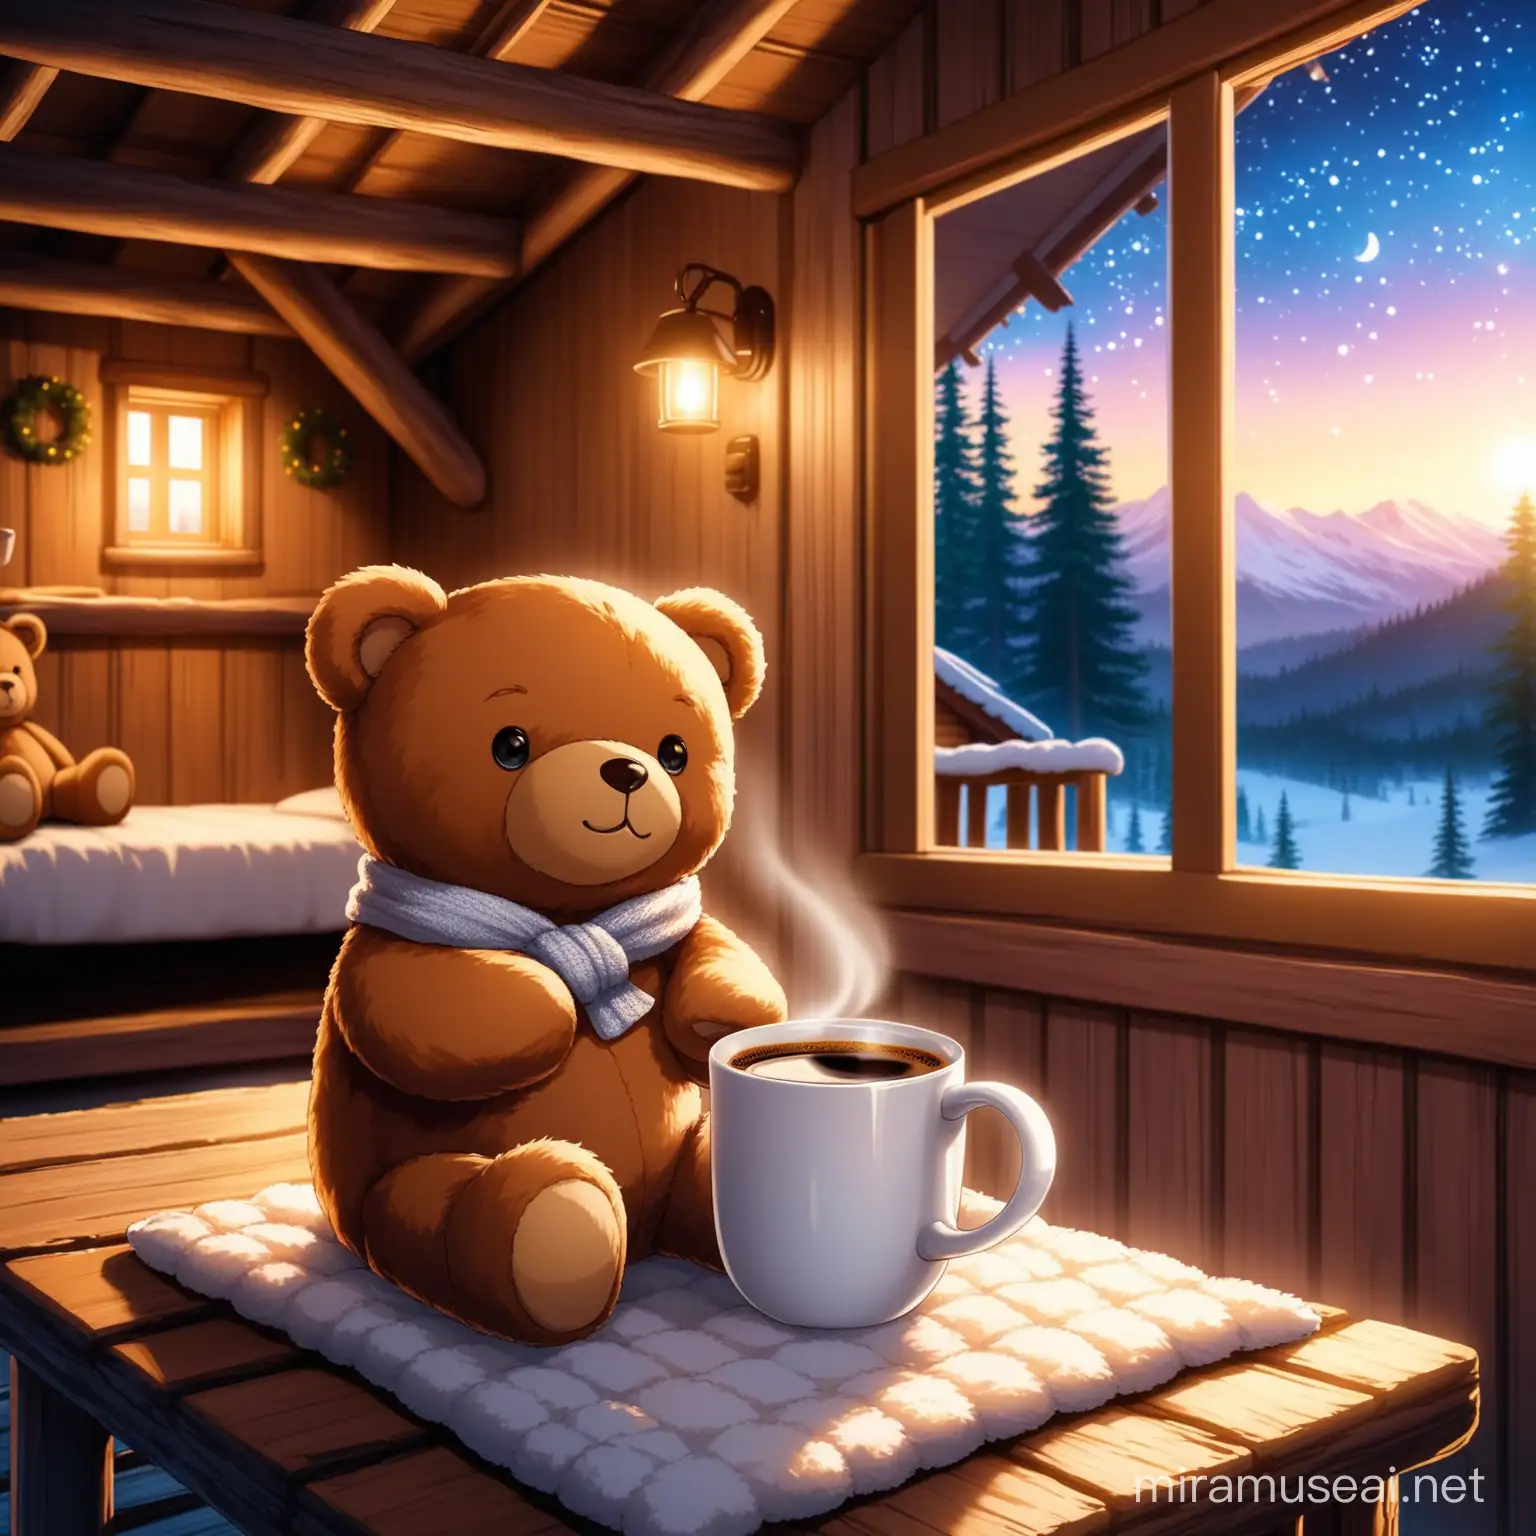 Cozy Teddy Bear Drinking Coffee in Enchanted Cabin